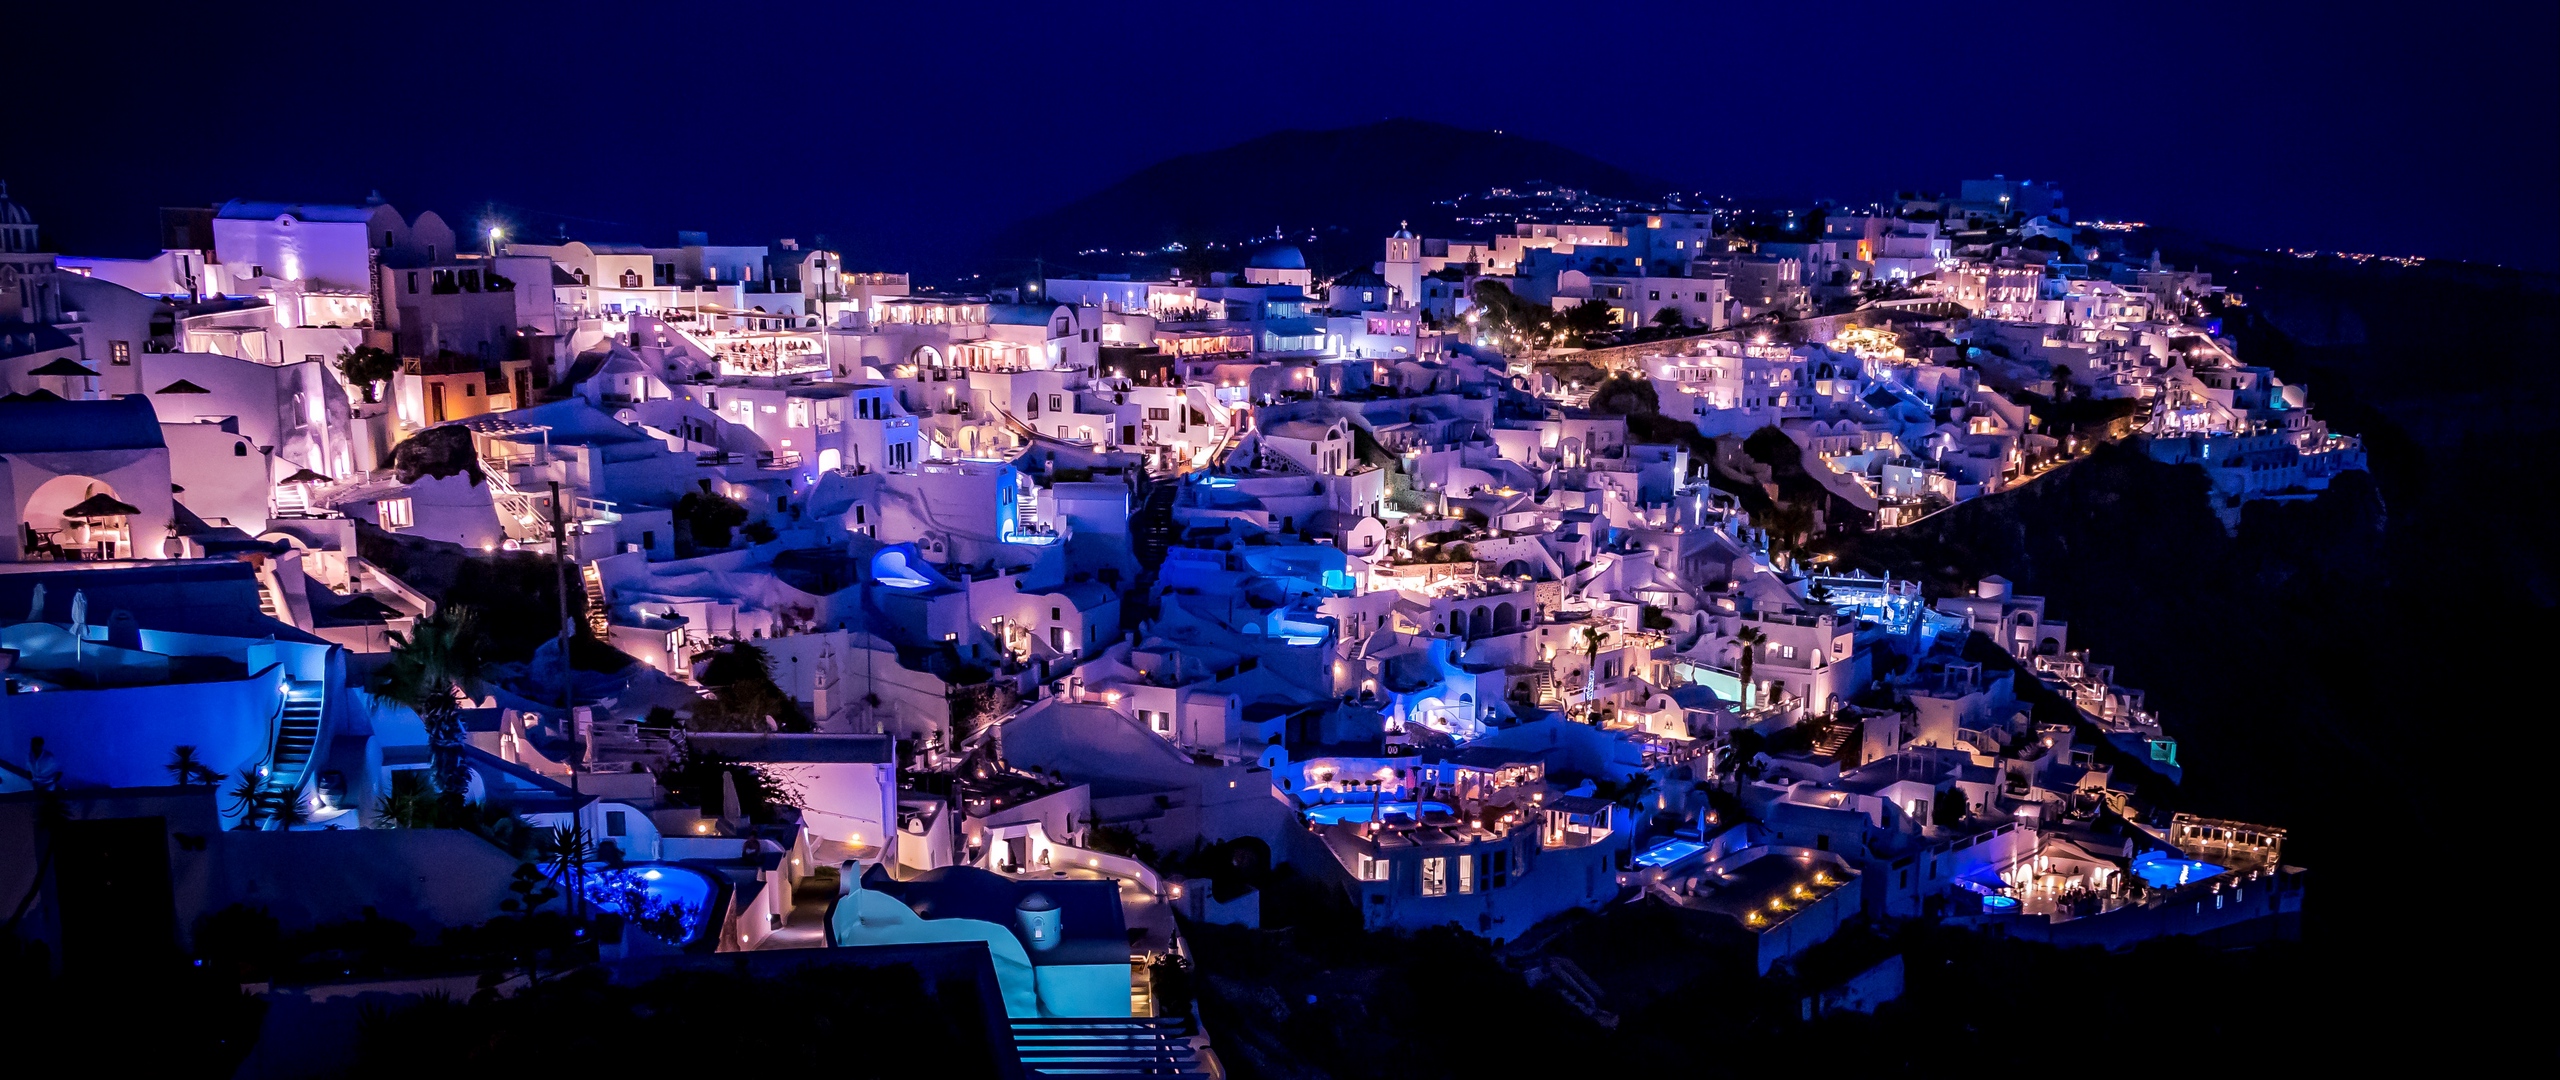 Download wallpaper 2560x1080 santorini, greece, night city